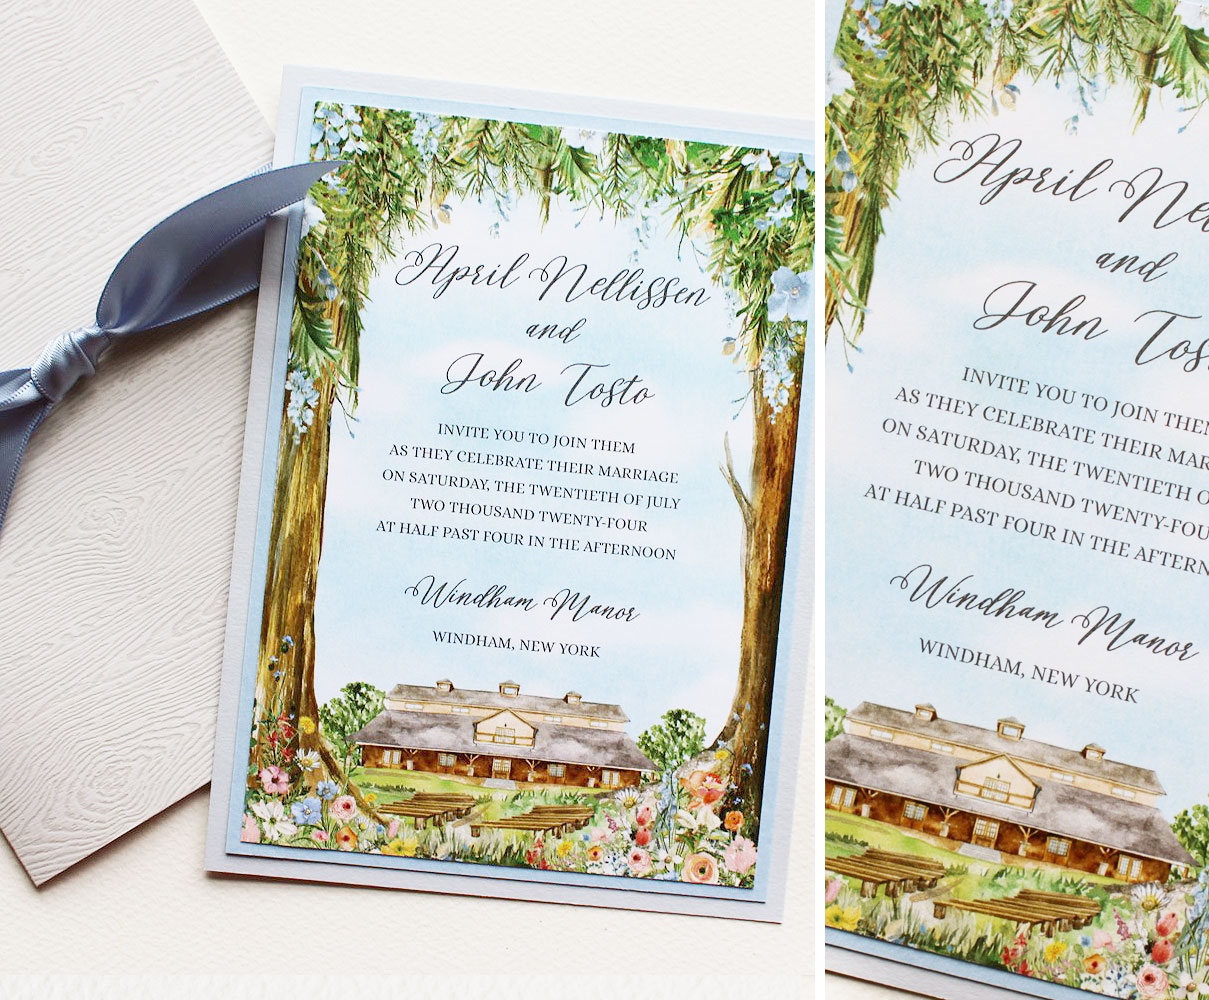 Windham Manor Illustrated Wedding Invitations